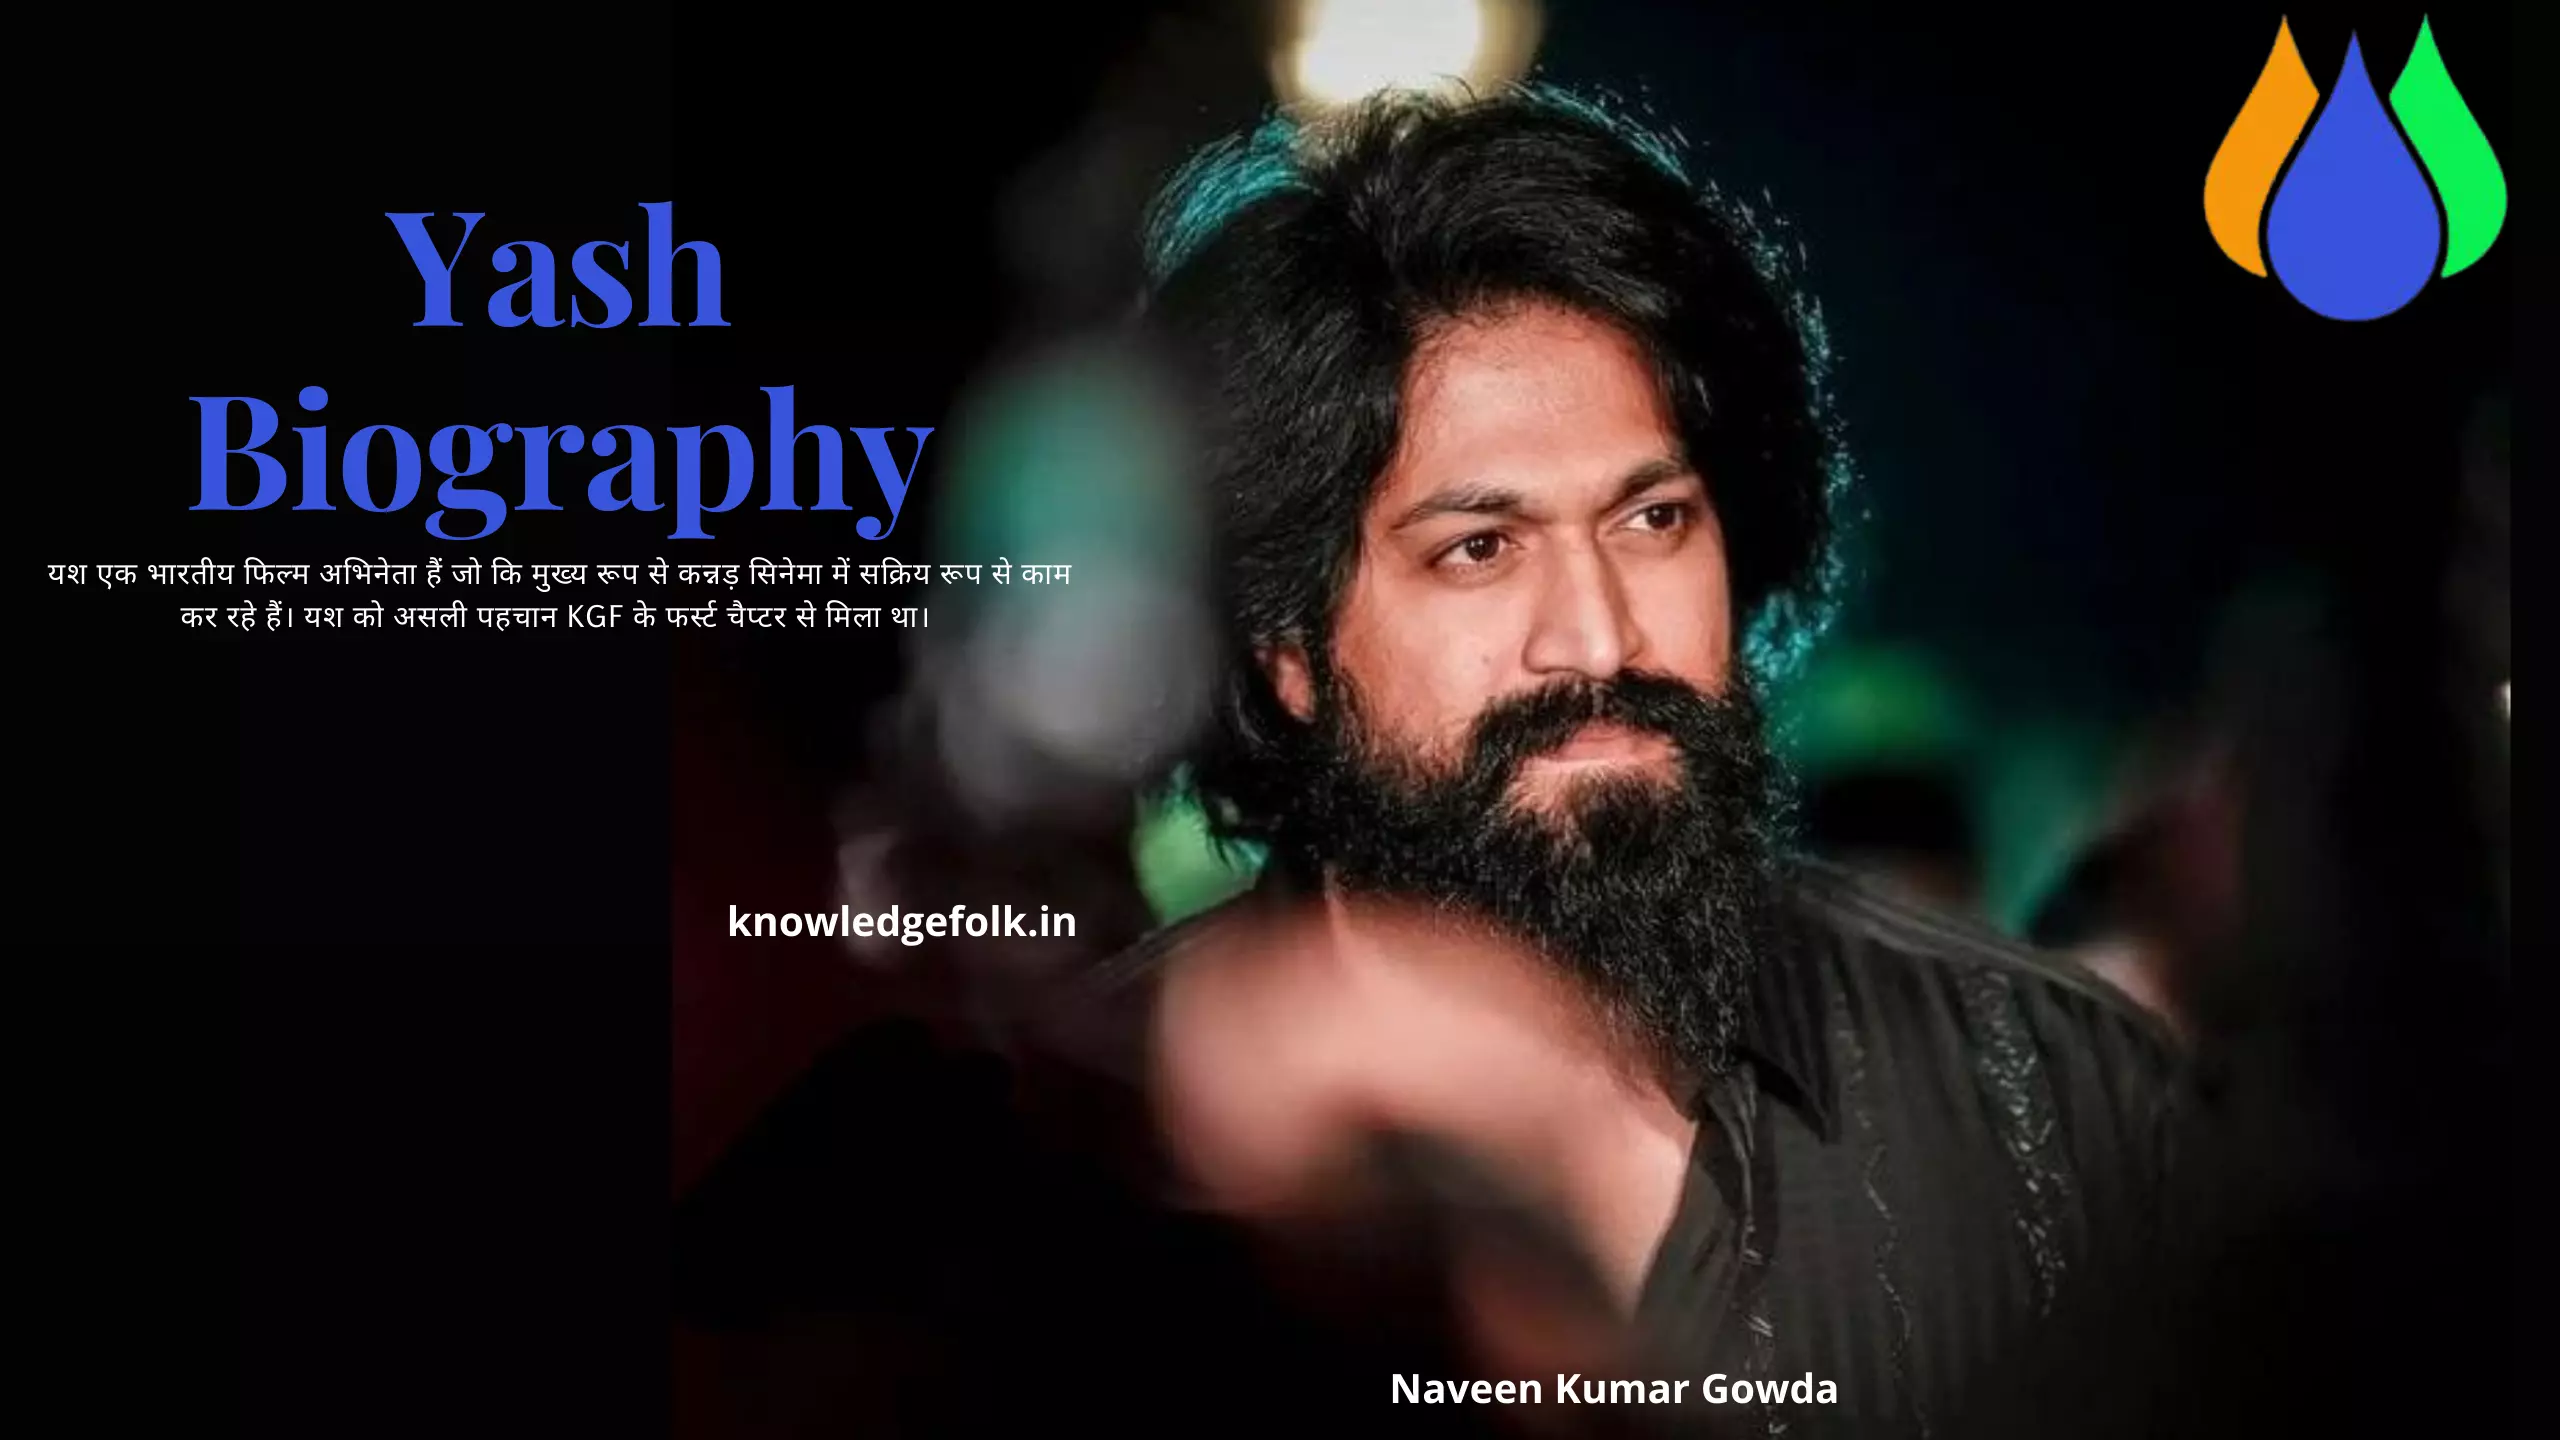 Yash Biography in Hindi। यश जीवन परिचय। Naveen Kumar Gowda Biography